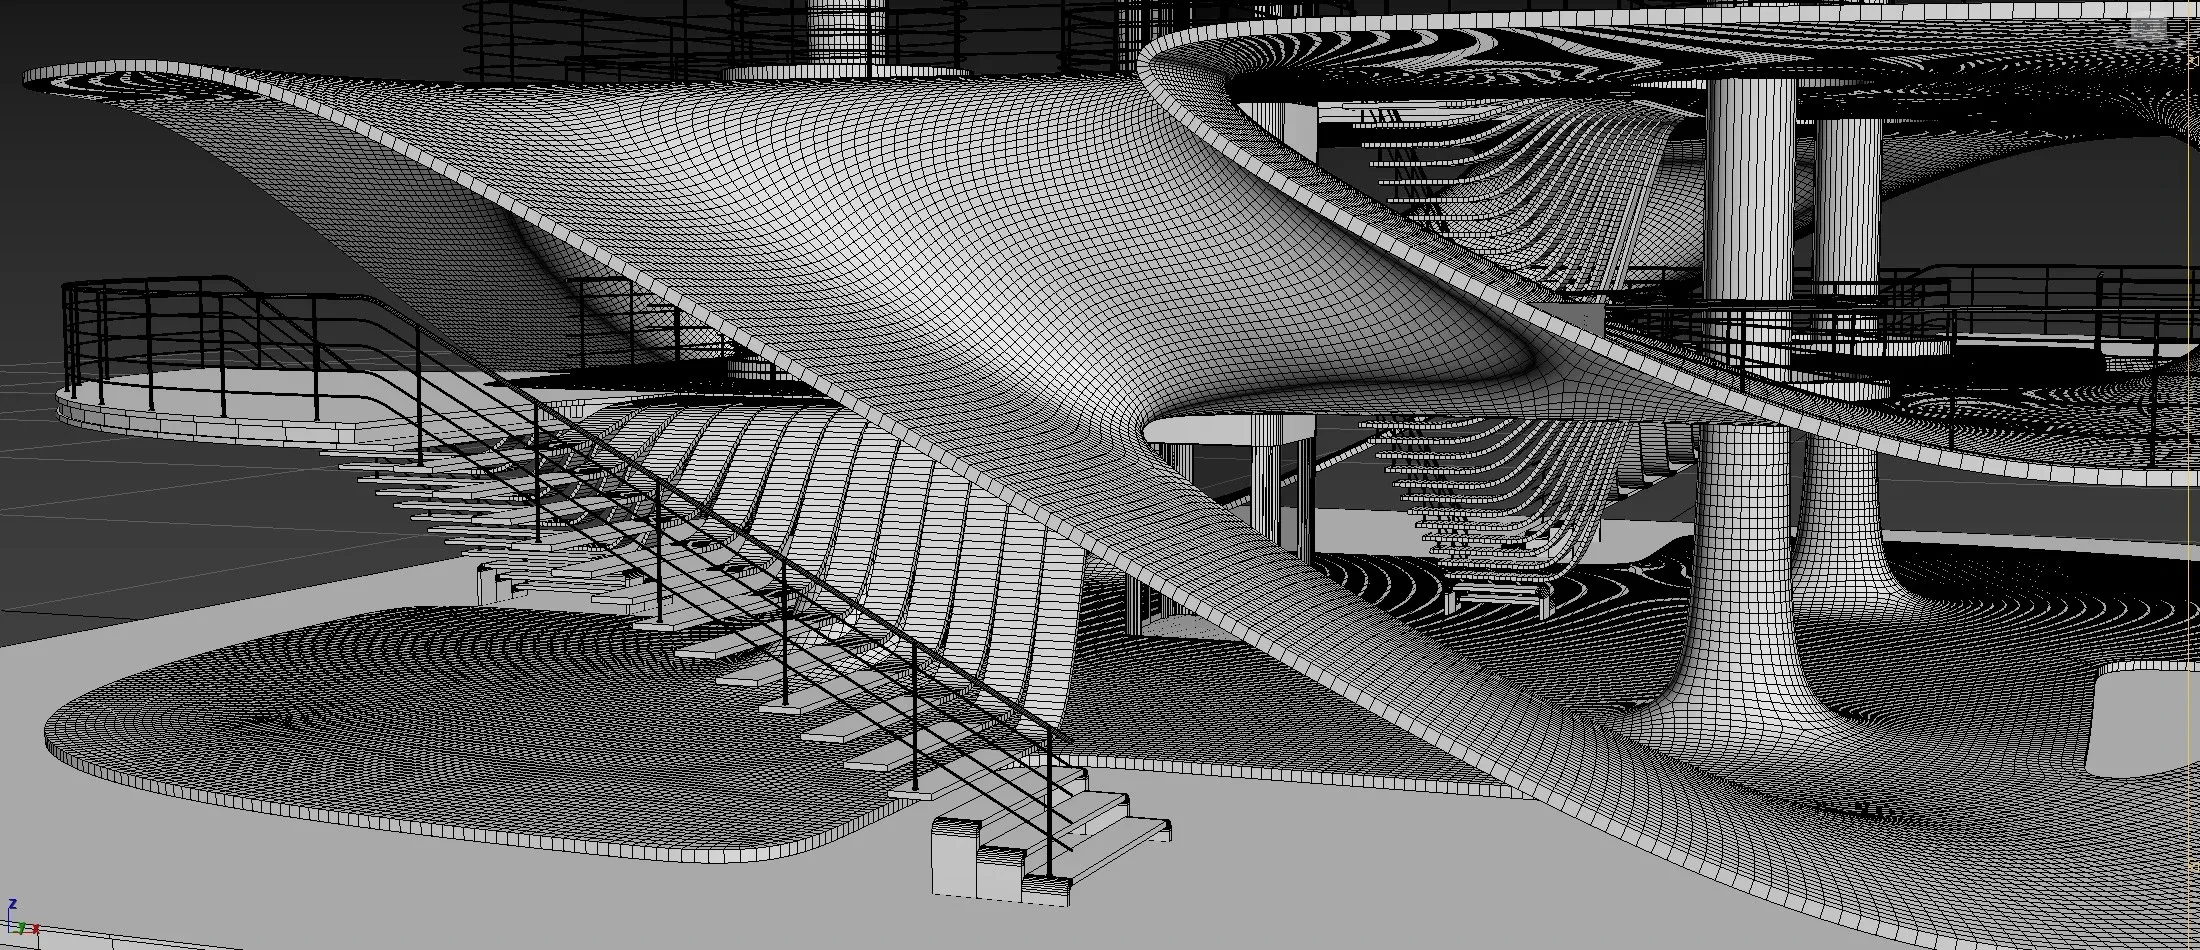 Futuristic Architecture - Parametric Sci-Fi Exhibition Center / Pavilion